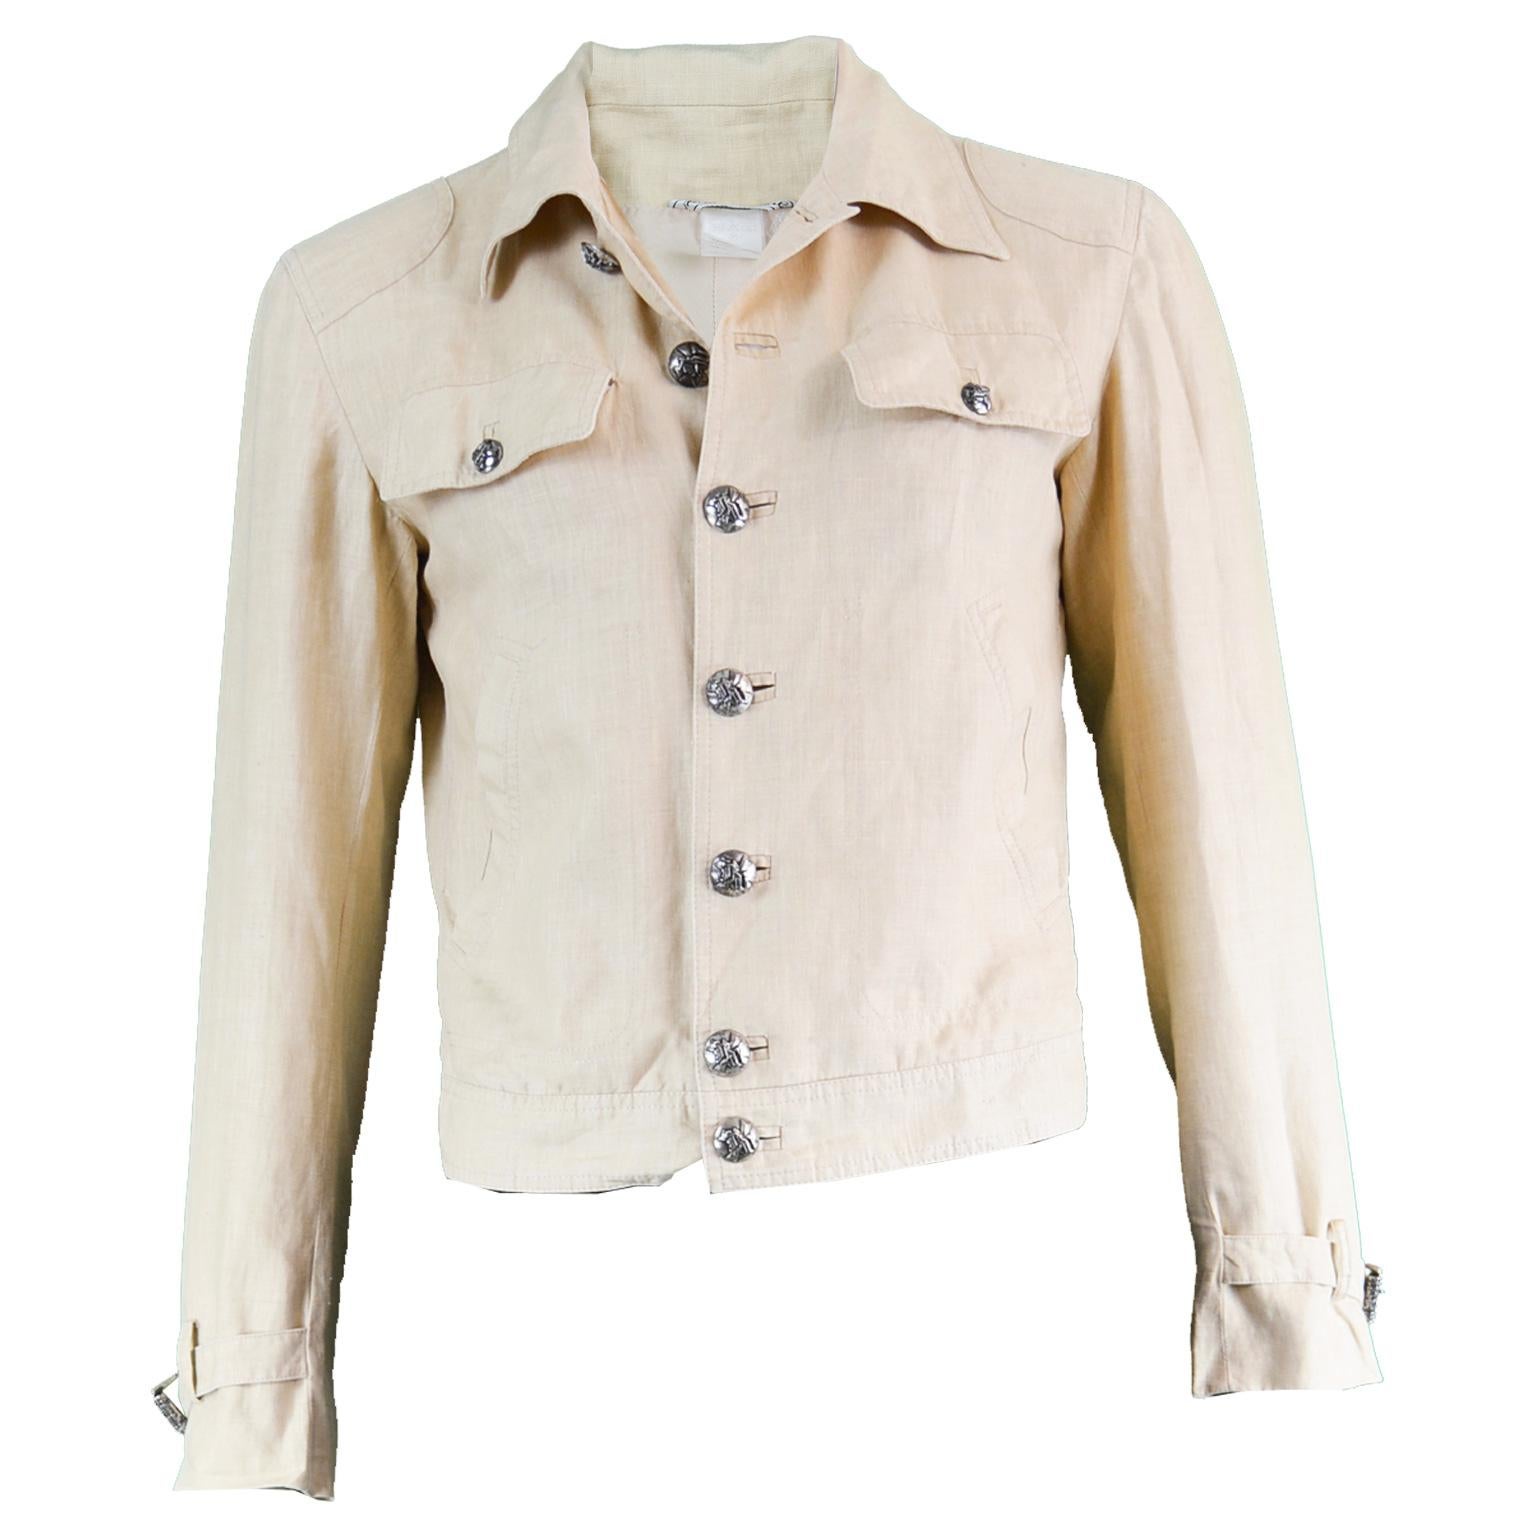 Gianni Versace Couture Pure Cream Linen Men's Unisex Jacket, S/S 2003